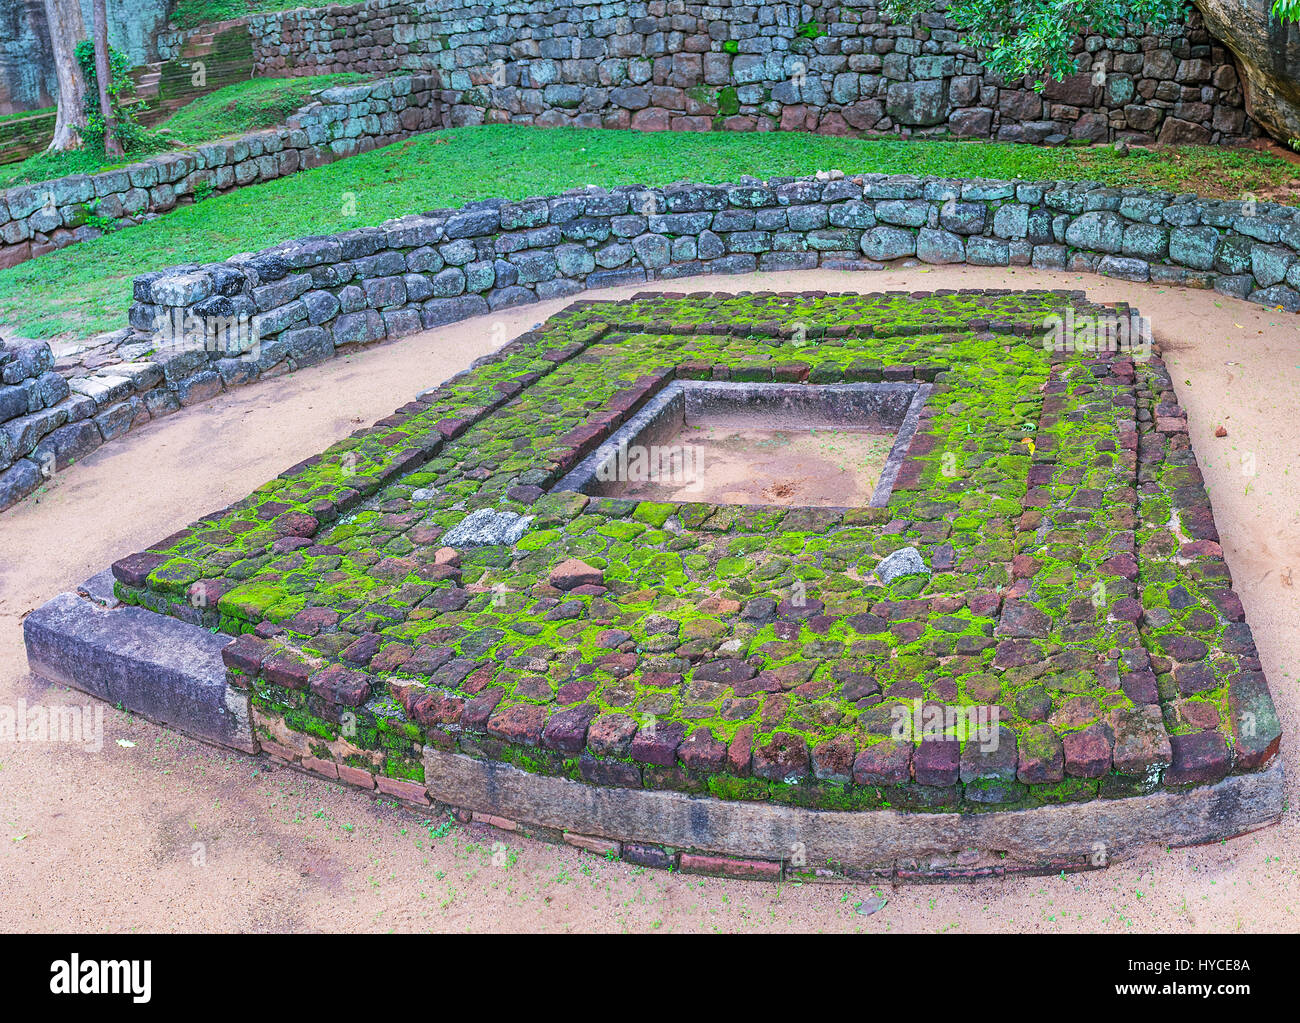 The Sigiriya archaeological complex contains ruins of ancient Buddhist monastery, Sri Lanka. Stock Photo